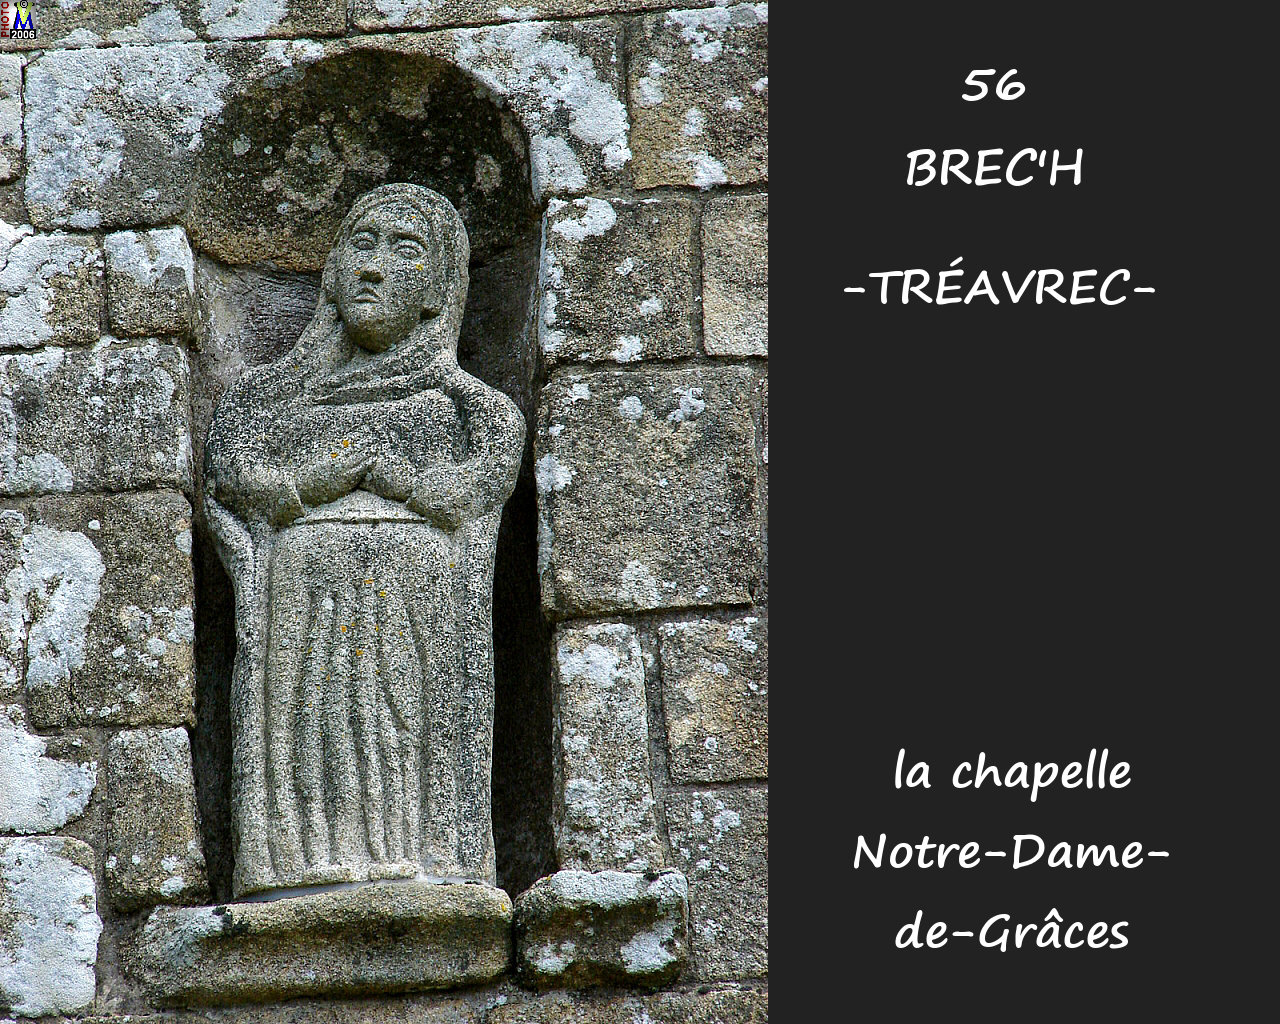 56BRECH_chapelle_NDG_Treavrec_104.jpg